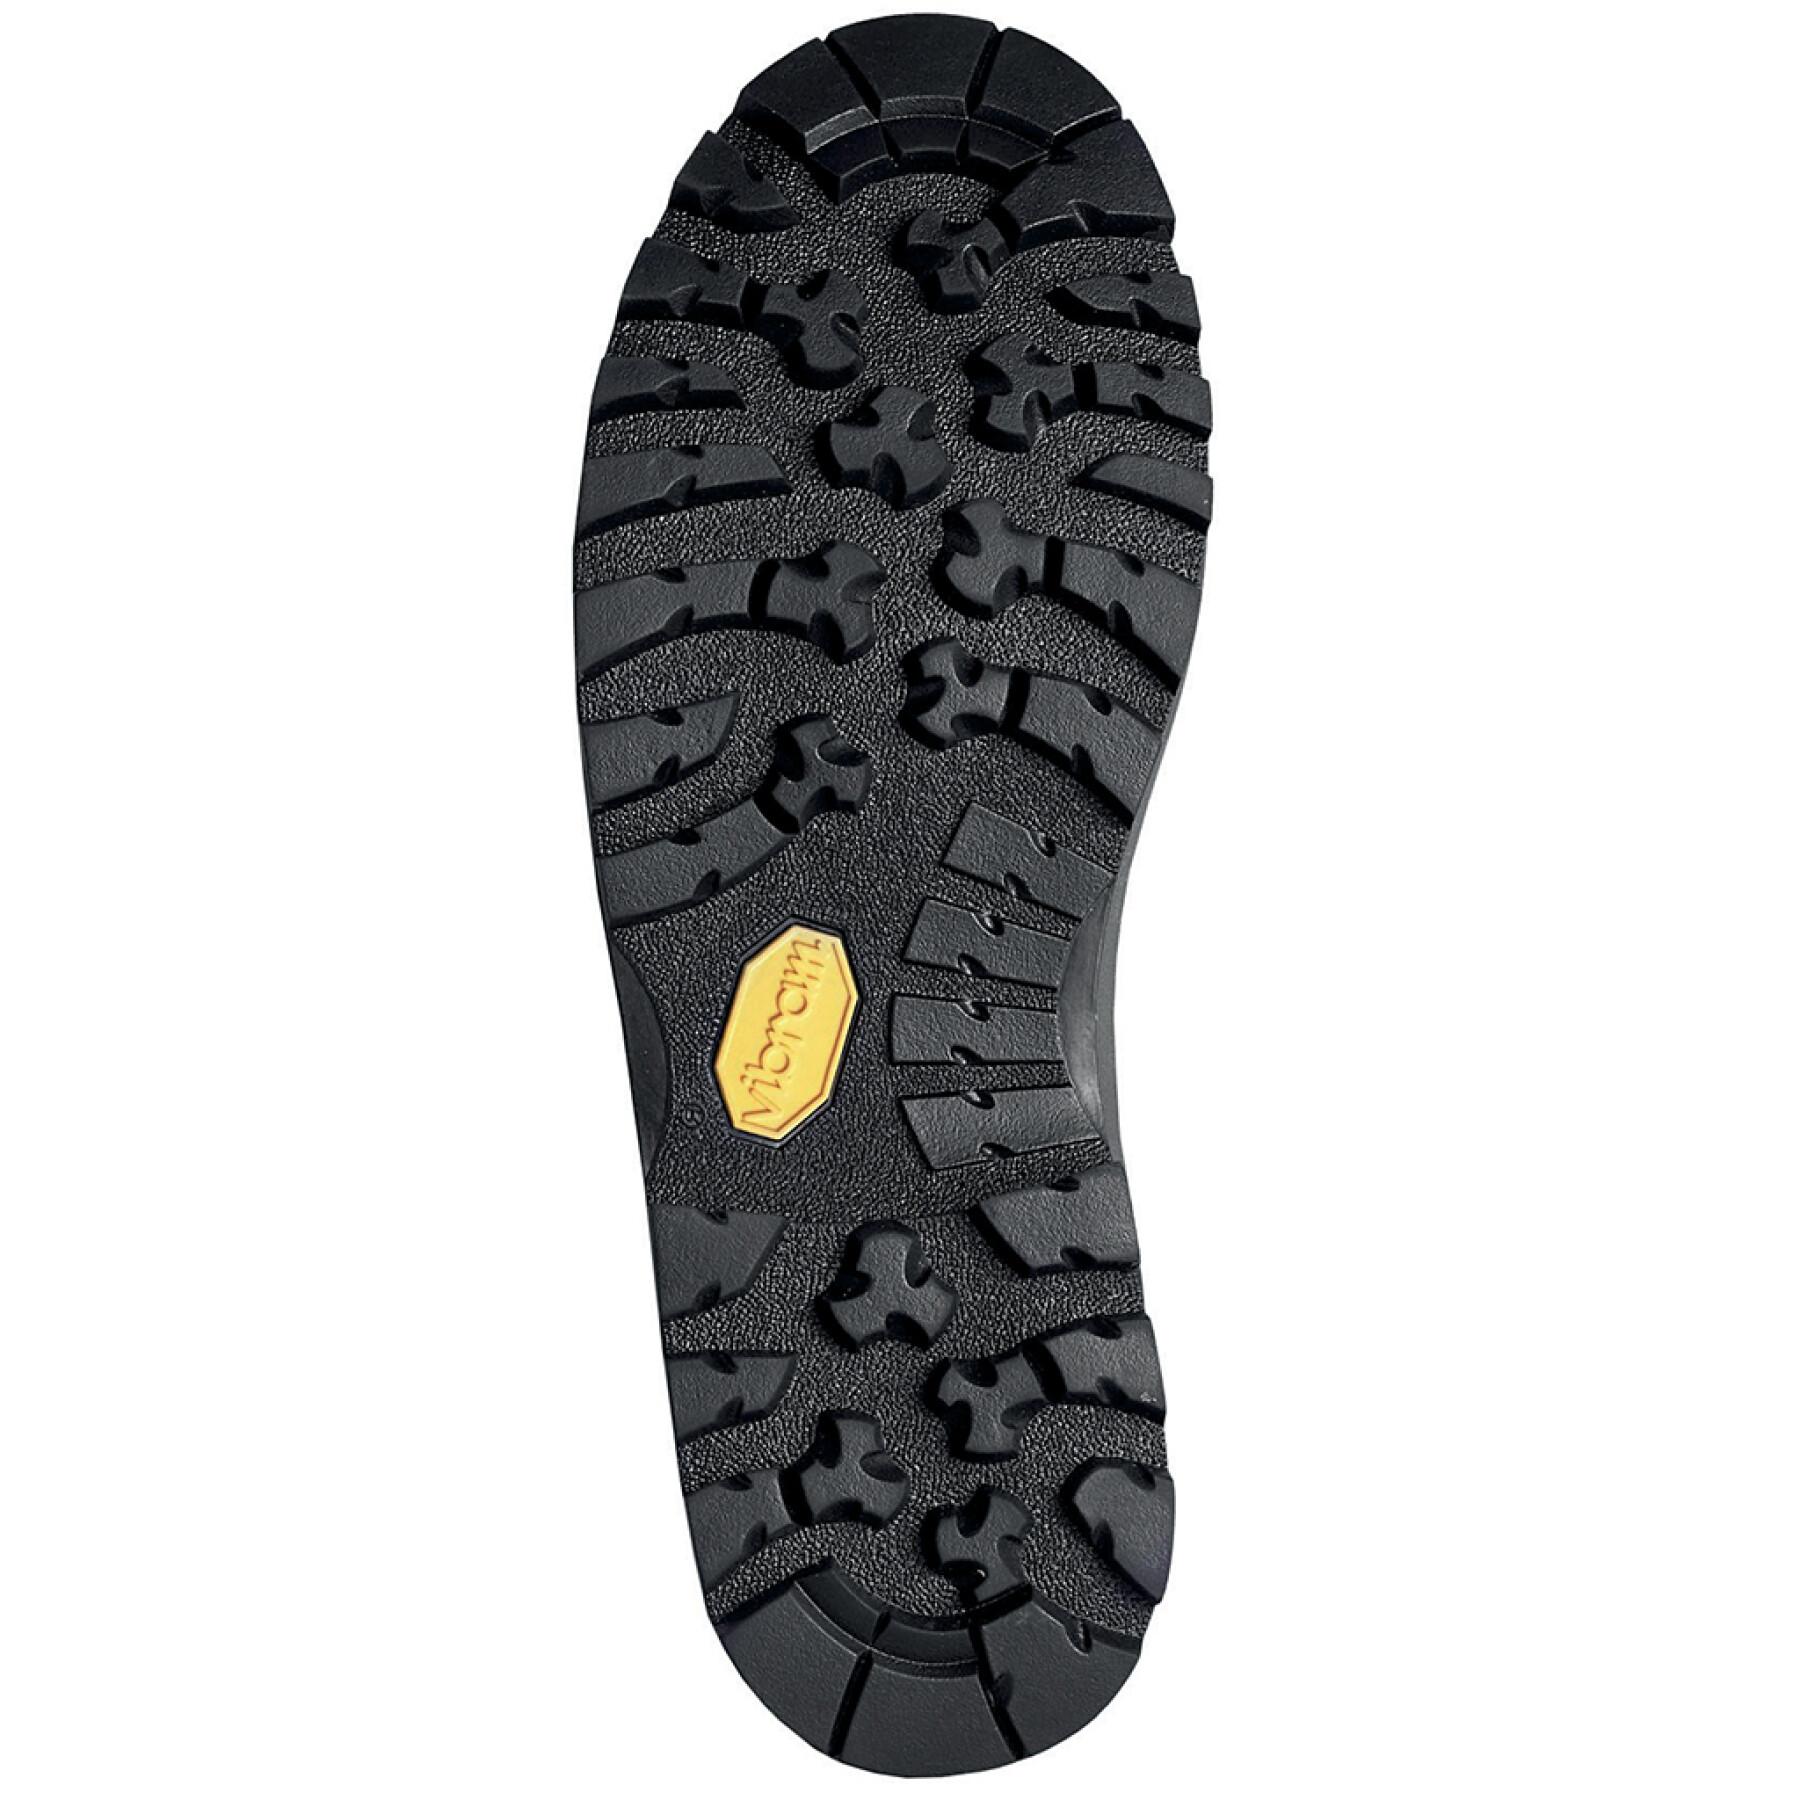 Zapatillas de senderismo Trezeta Top Evo Leather